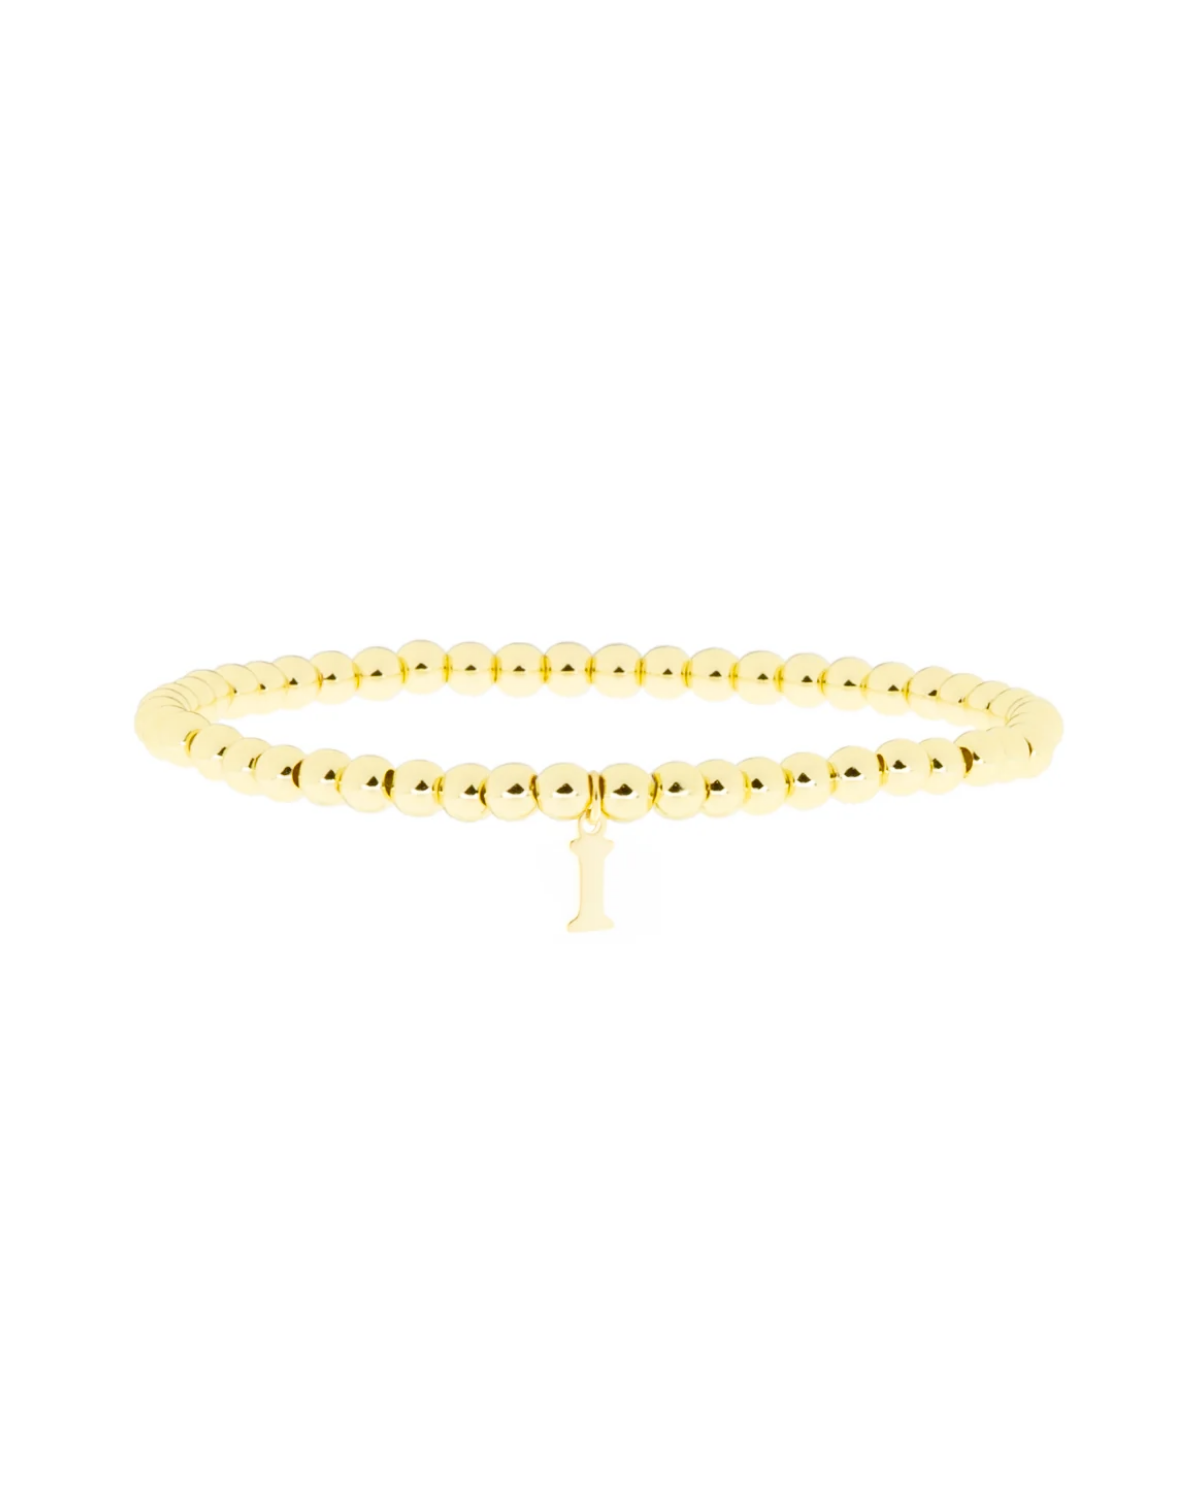 Gold Brass Initial Charm Ball Bracelet - I